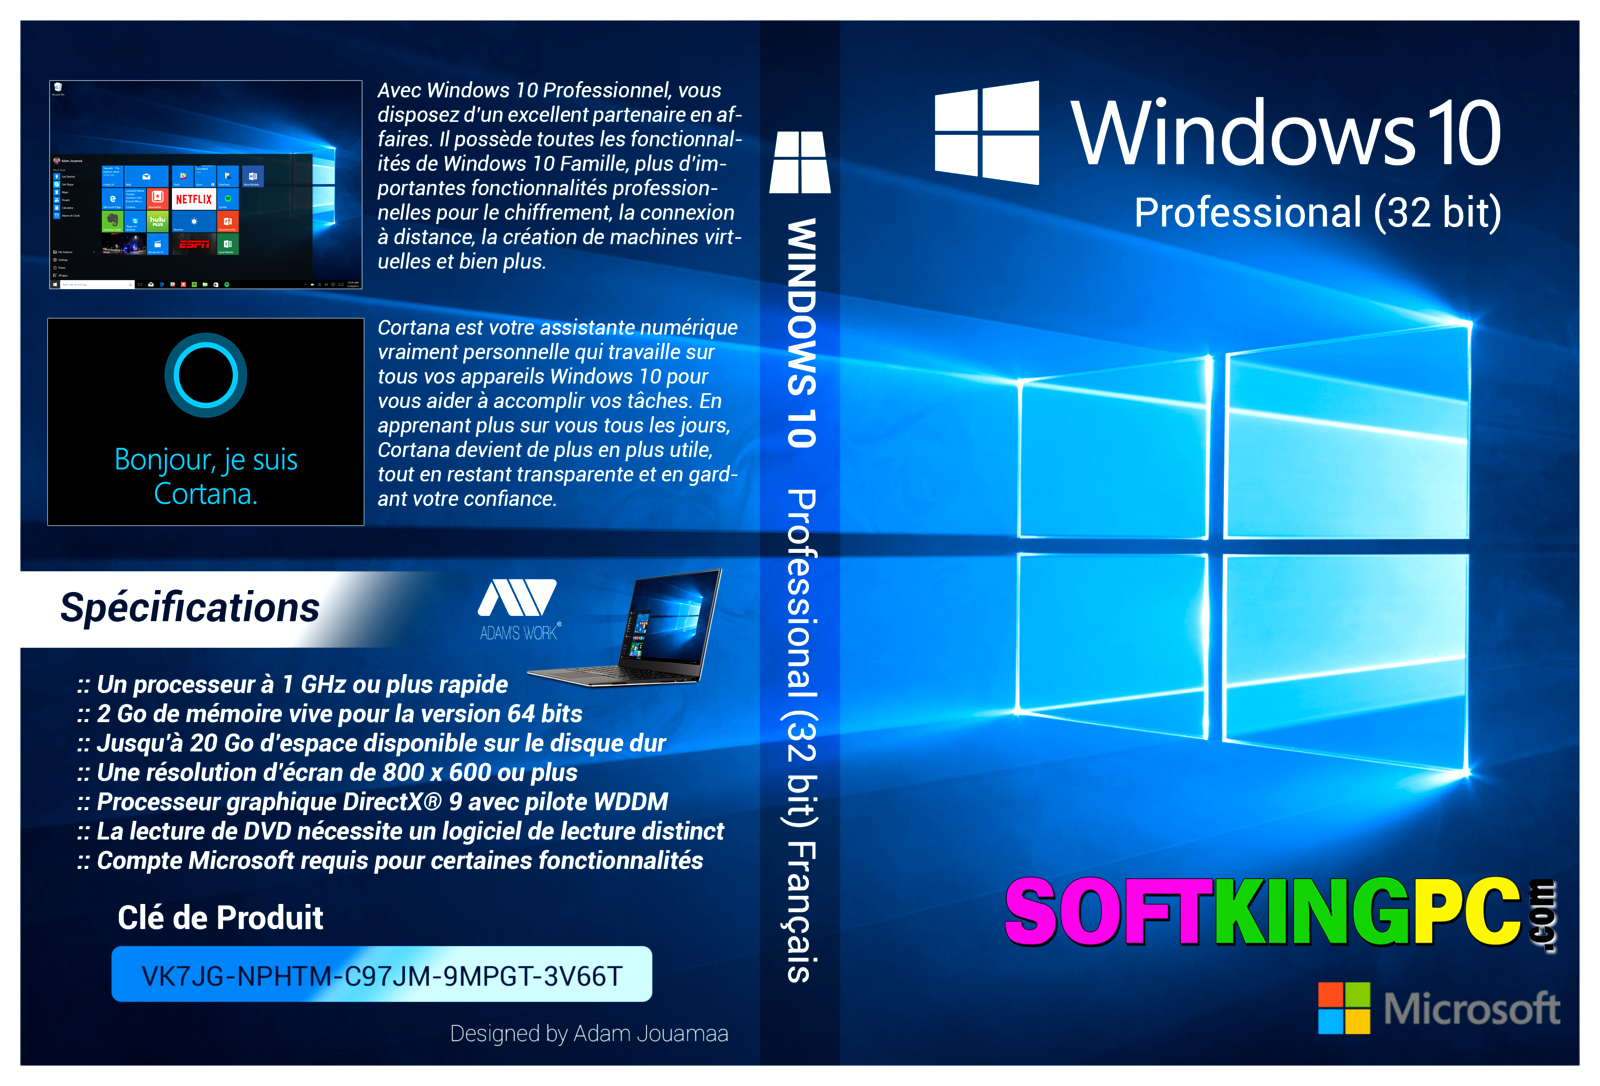 download windows 10 pro 32 bit iso full version